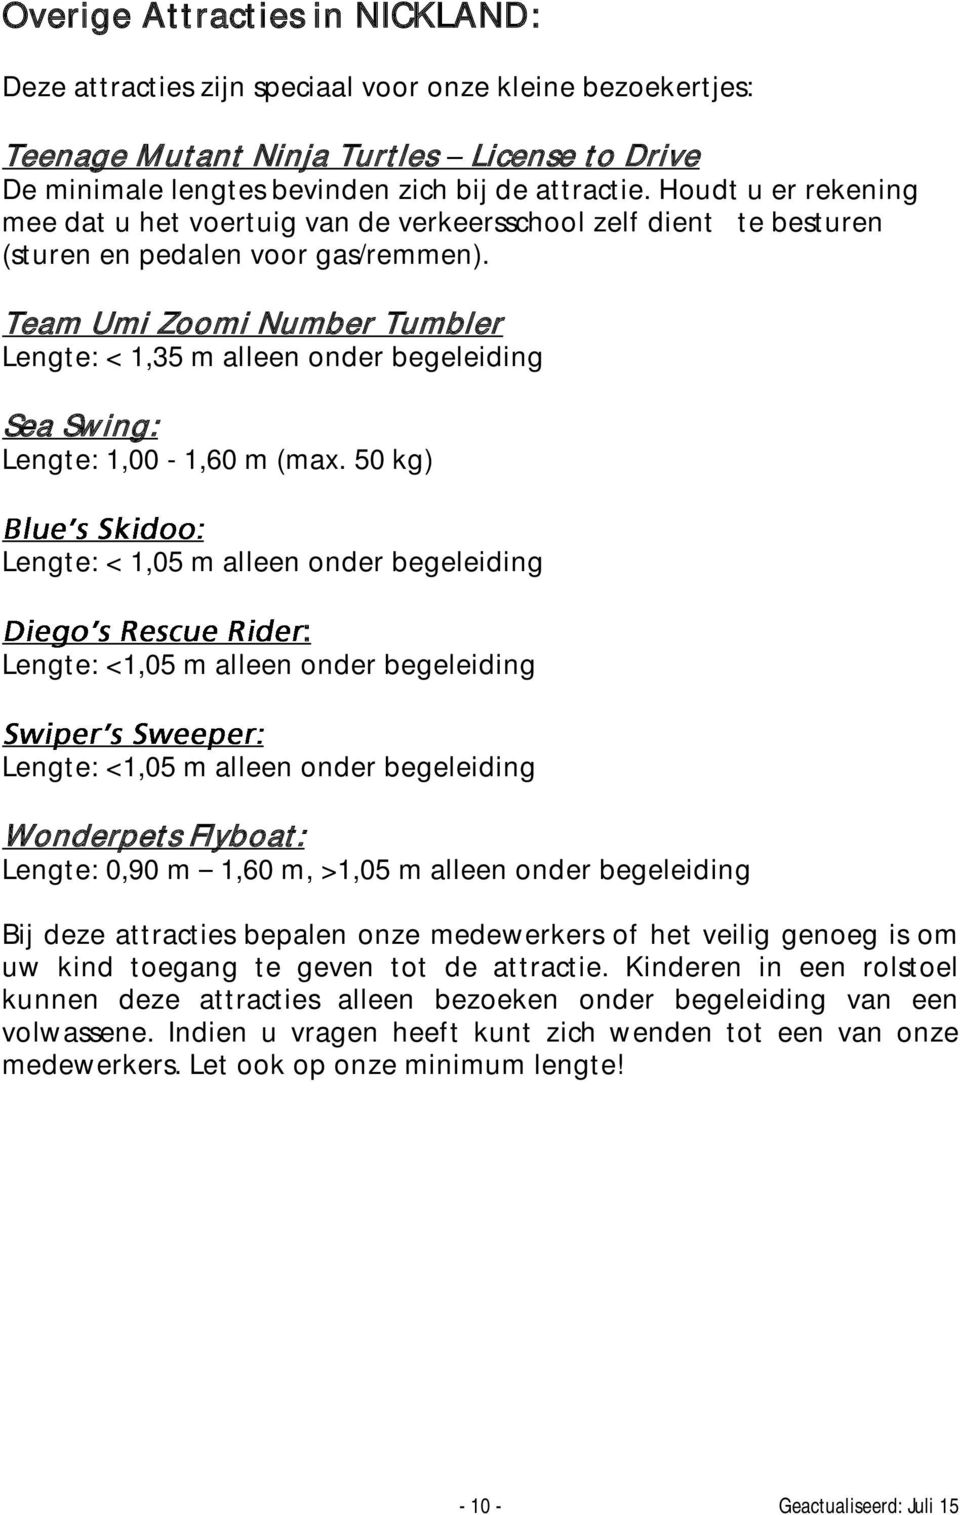 Team Umi Zoomi Number Tumbler Lengte: < 1,35 m alleen onder begeleiding Sea Swing: Lengte: 1,00-1,60 m (max.